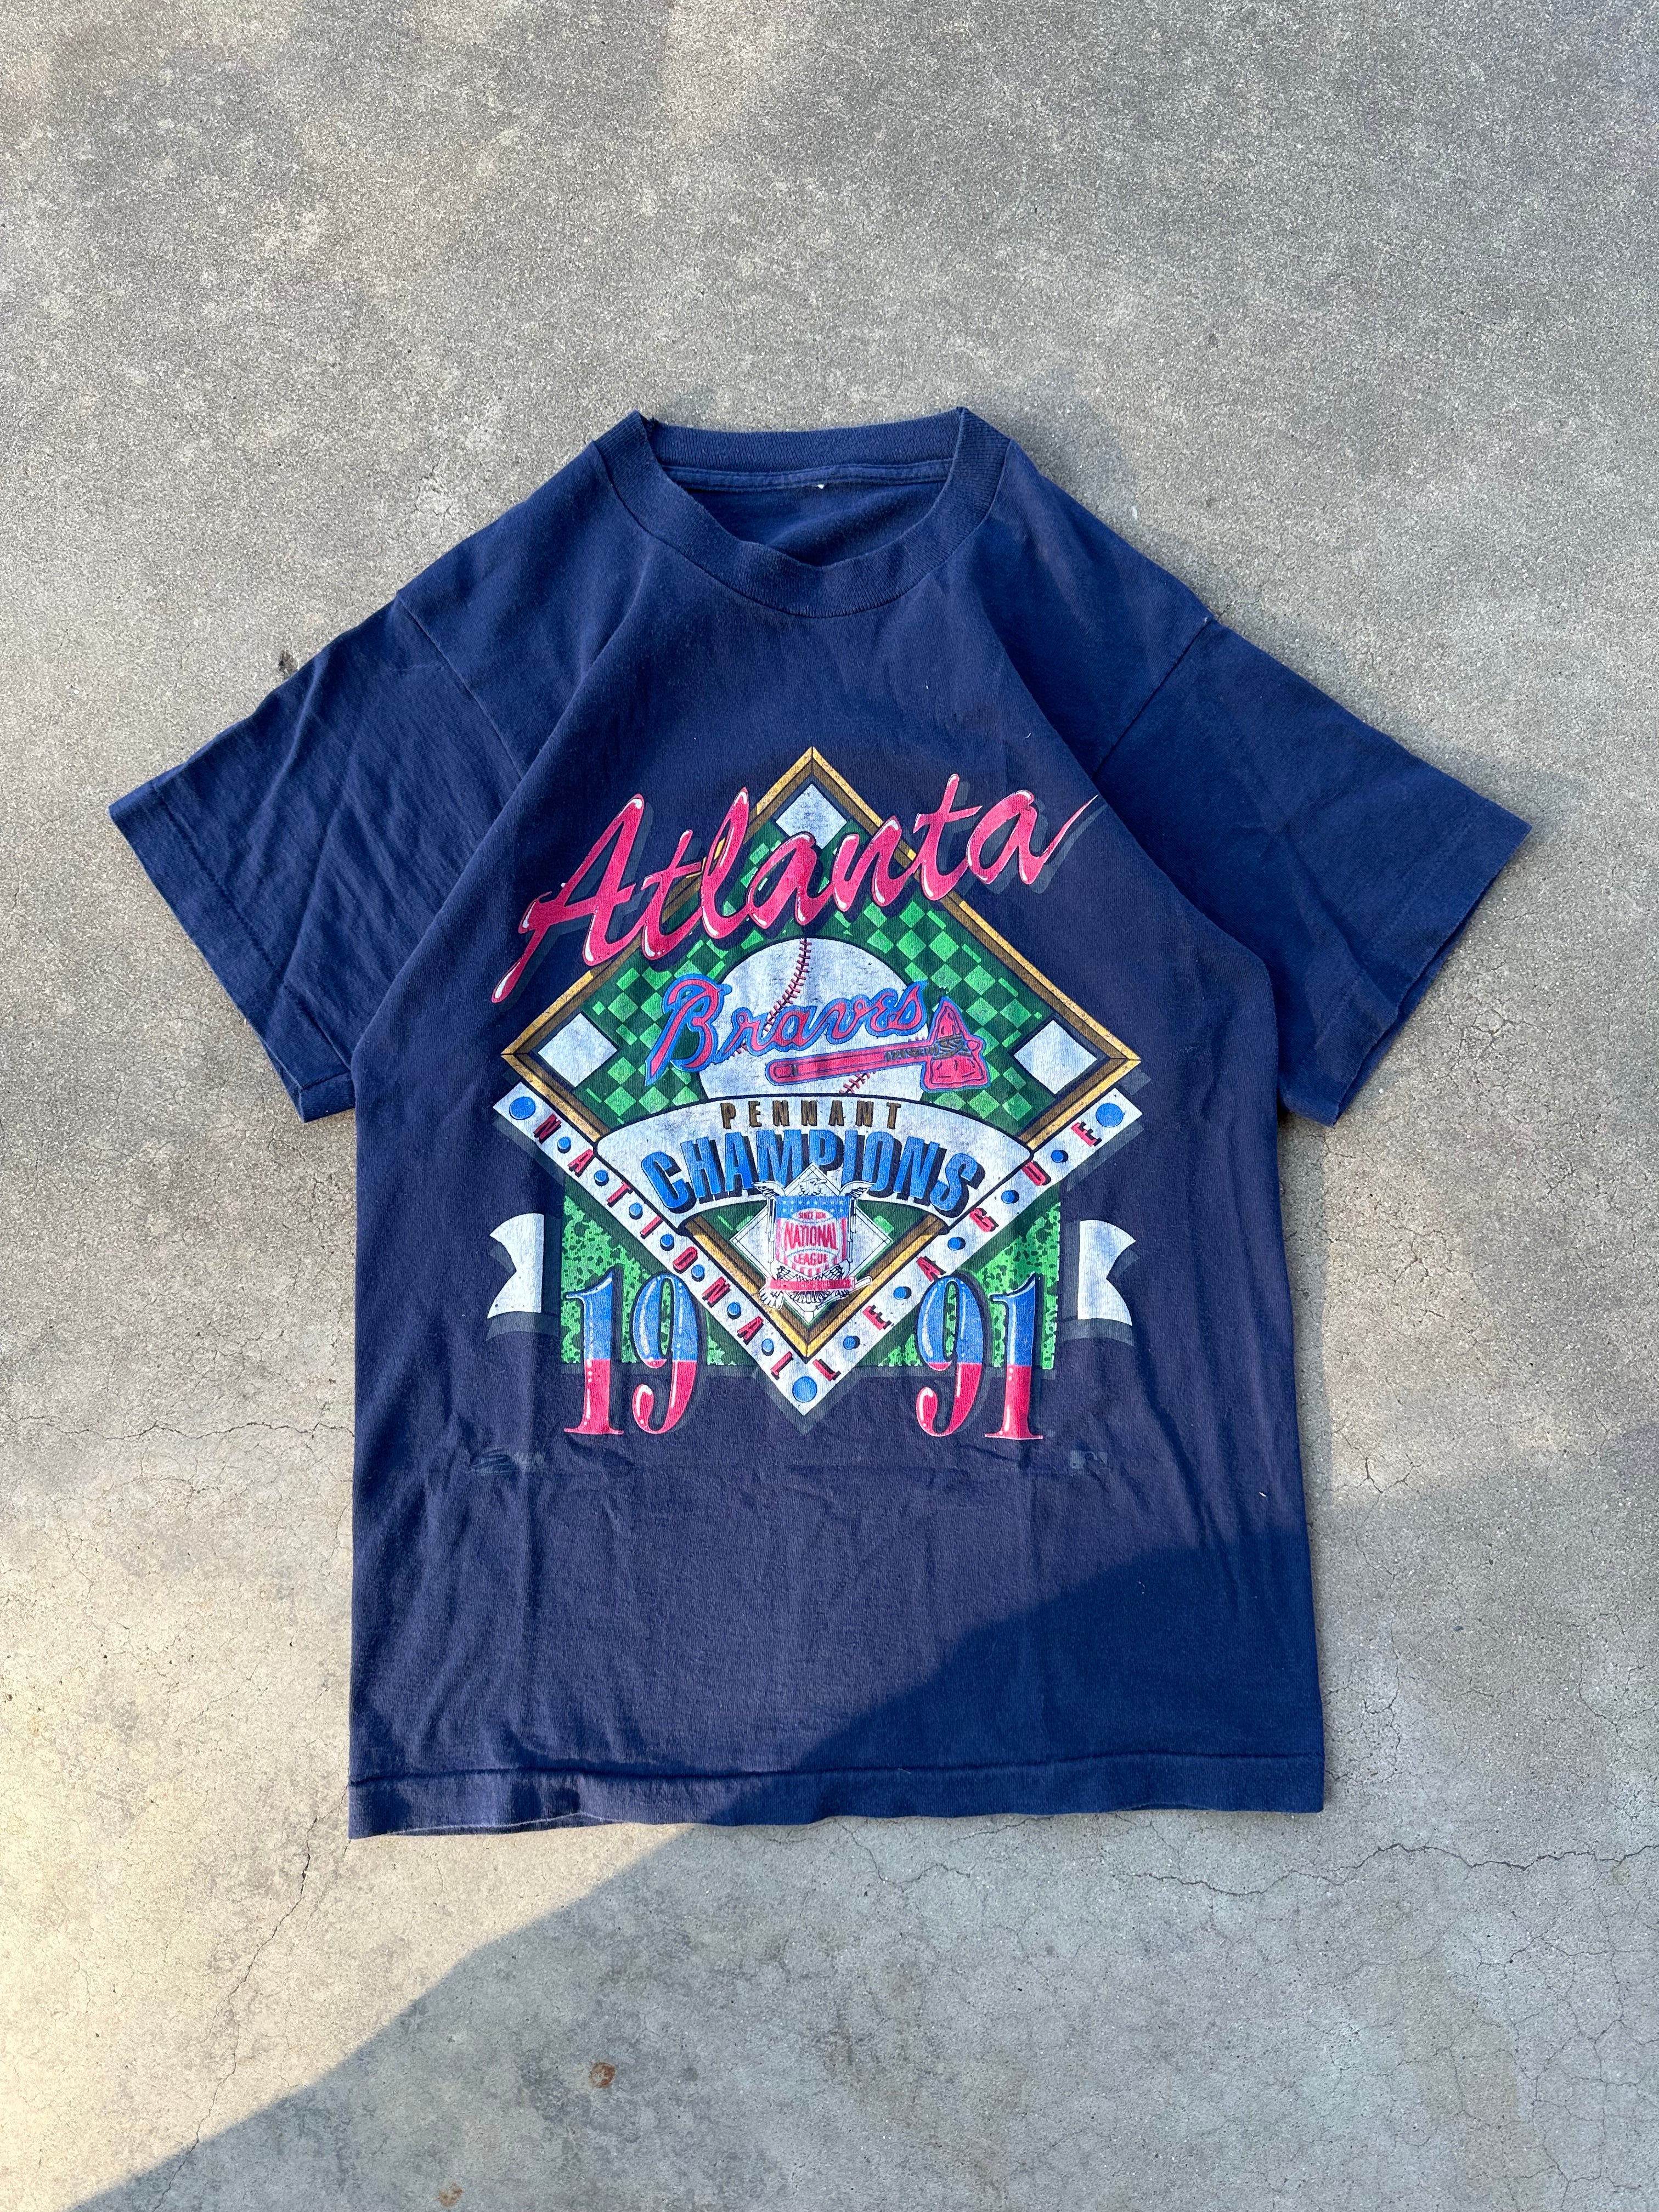 1991 Atlanta Braves Champions T-Shirt (M)